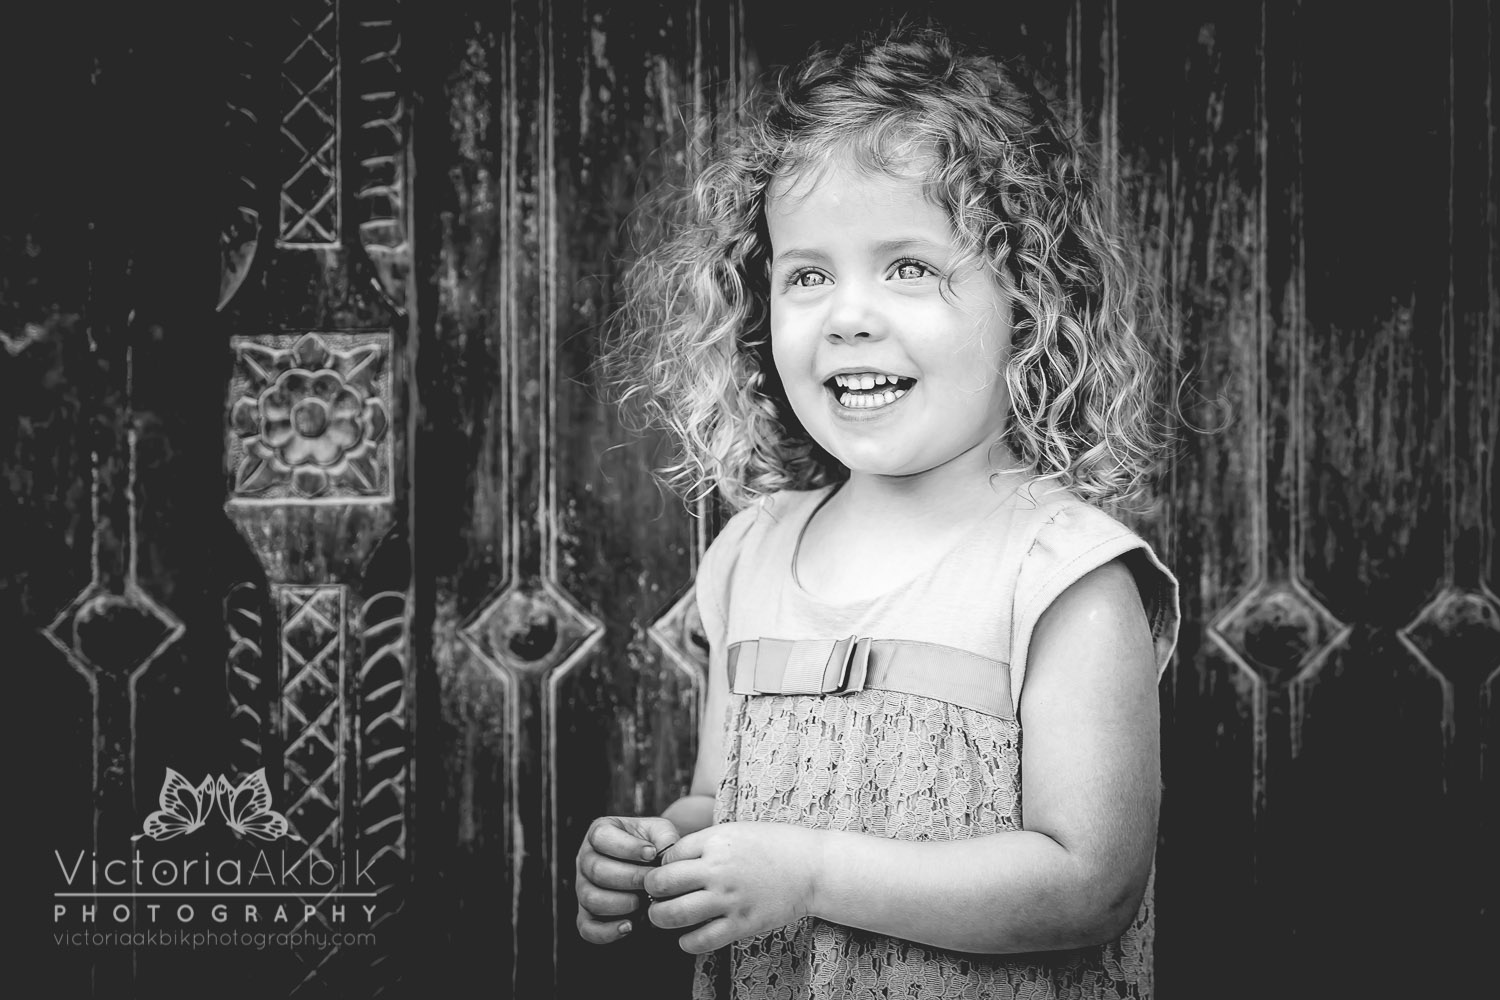 A Black & White World | Abu Dhabi Lifestyle Family Photography » Victoria Akbik Photography